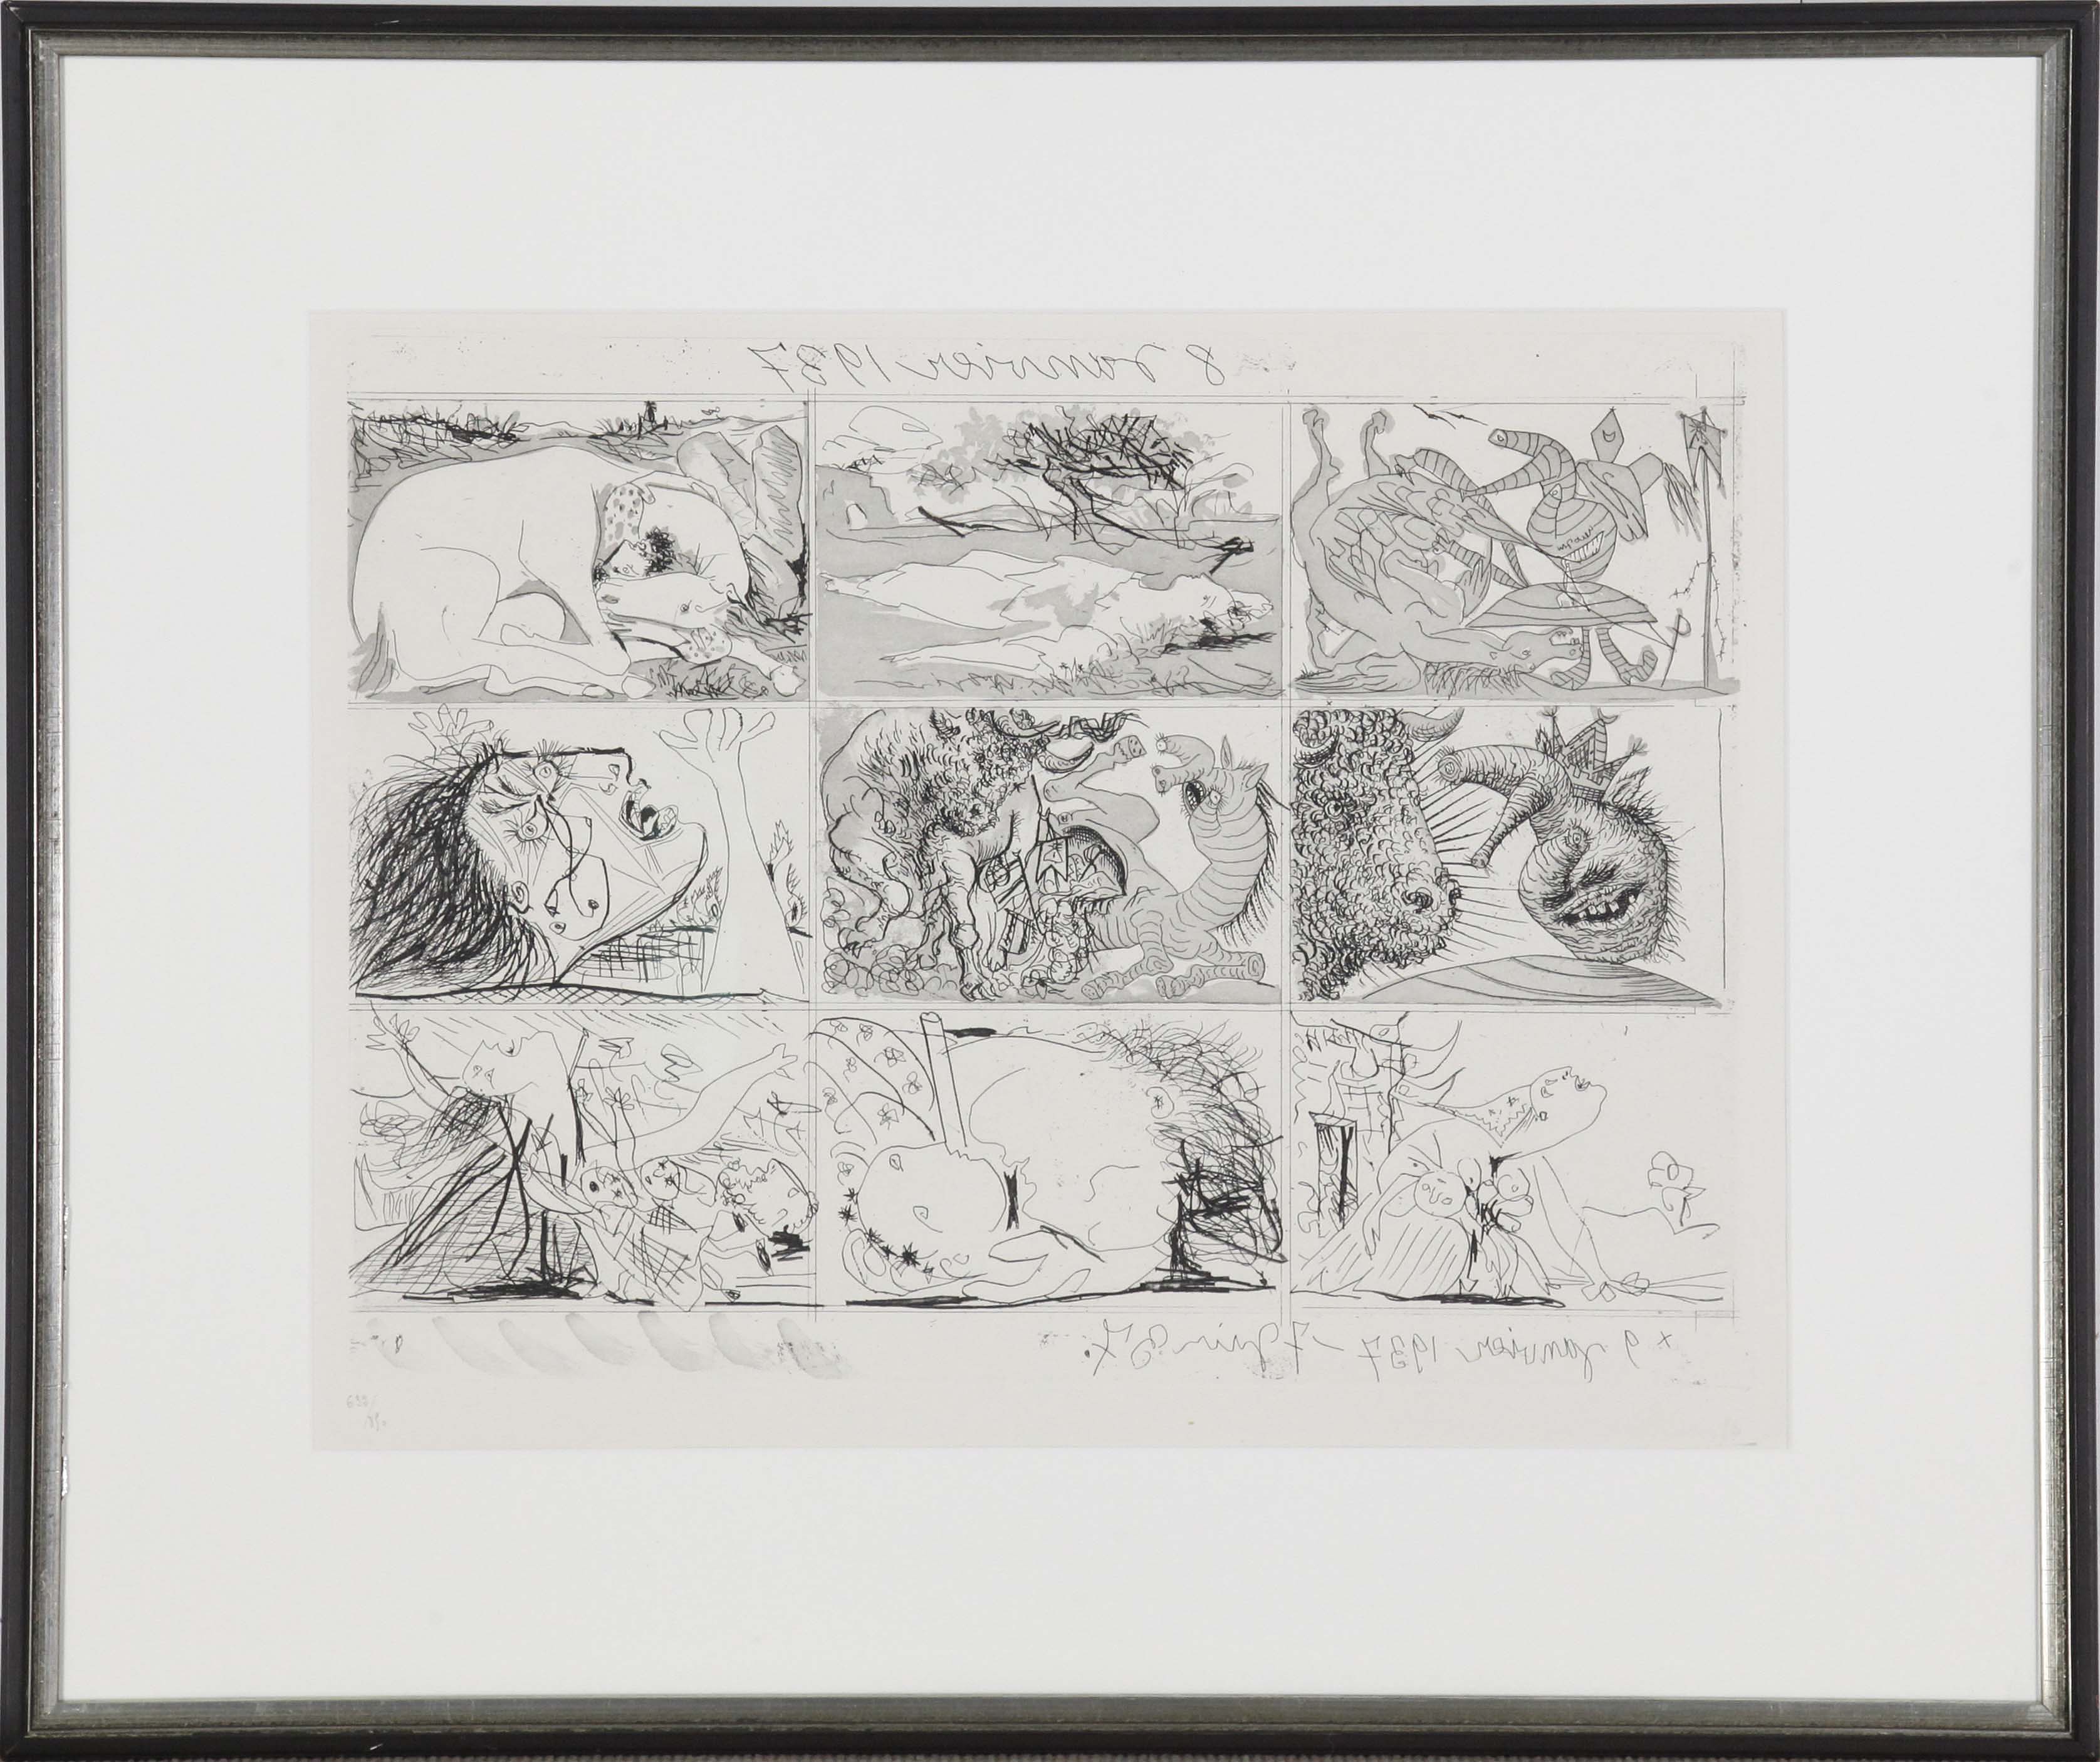 Pablo Picasso - Sueno y mentira de Franco - Planches I et II - Rahmenbild